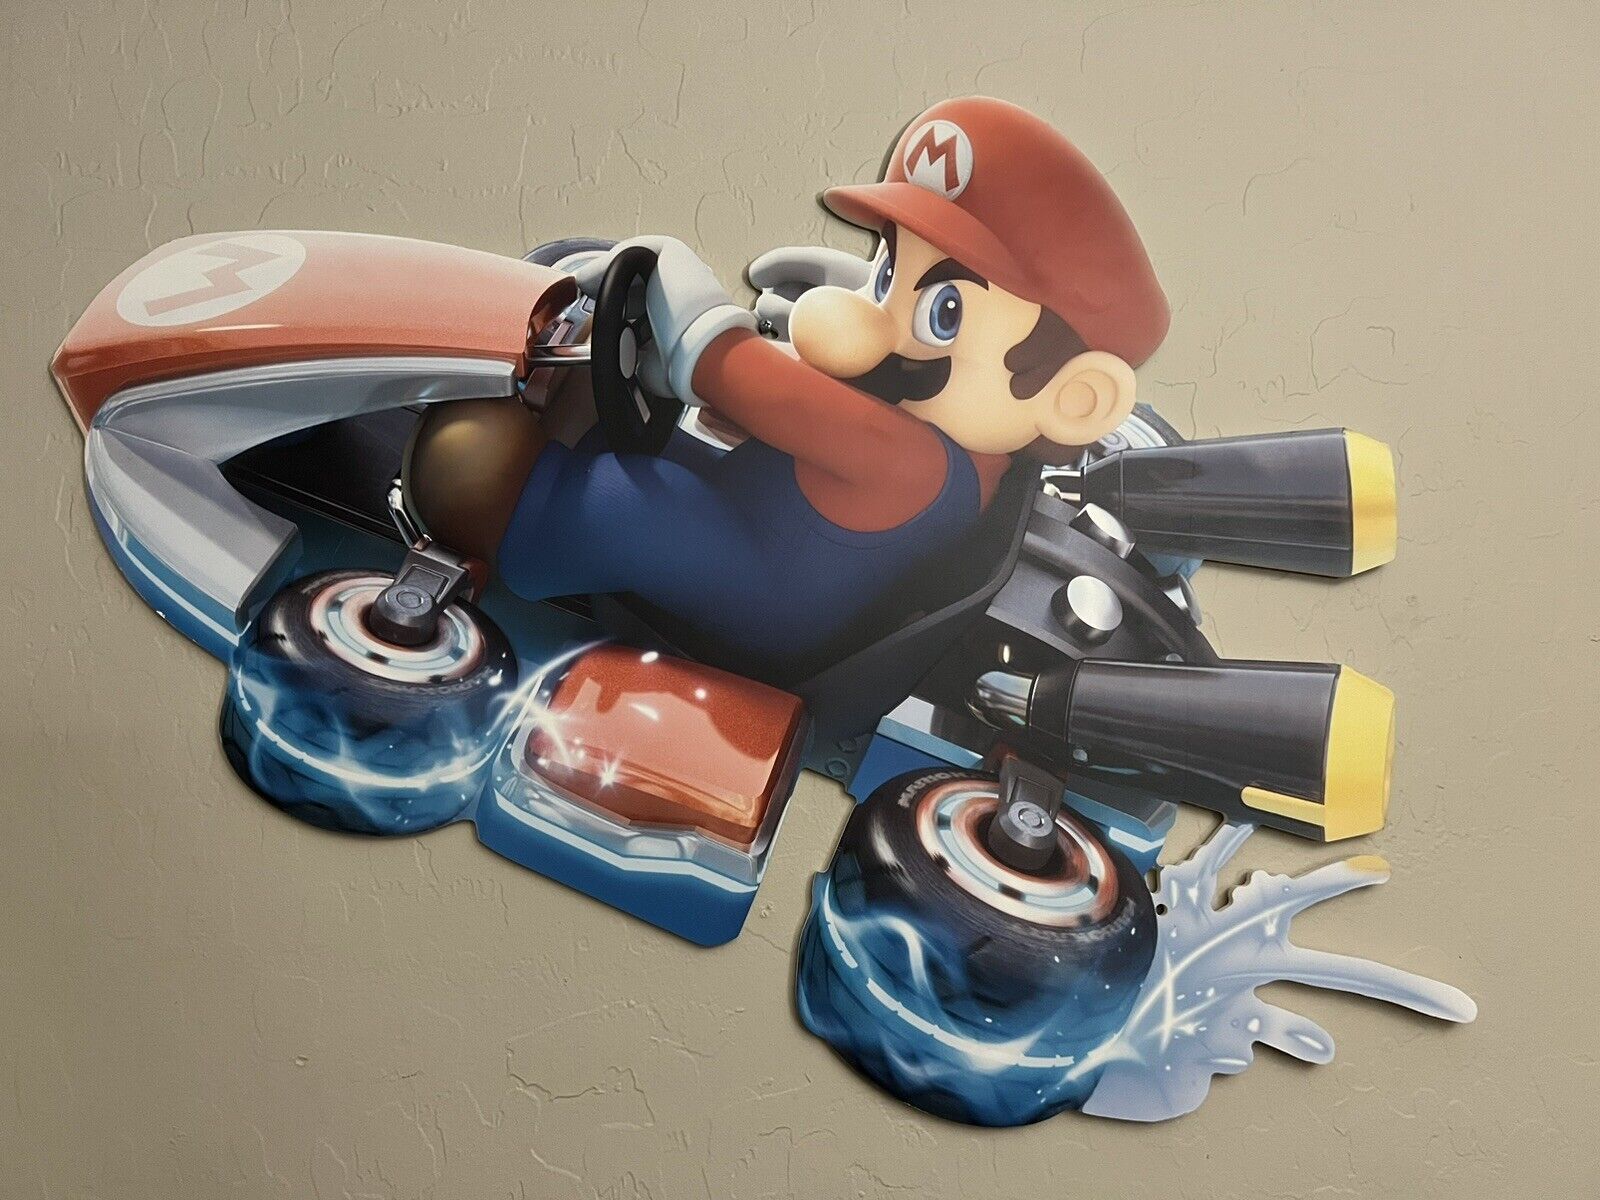 Mario Kart 8 Promo Display Nintendo promotional